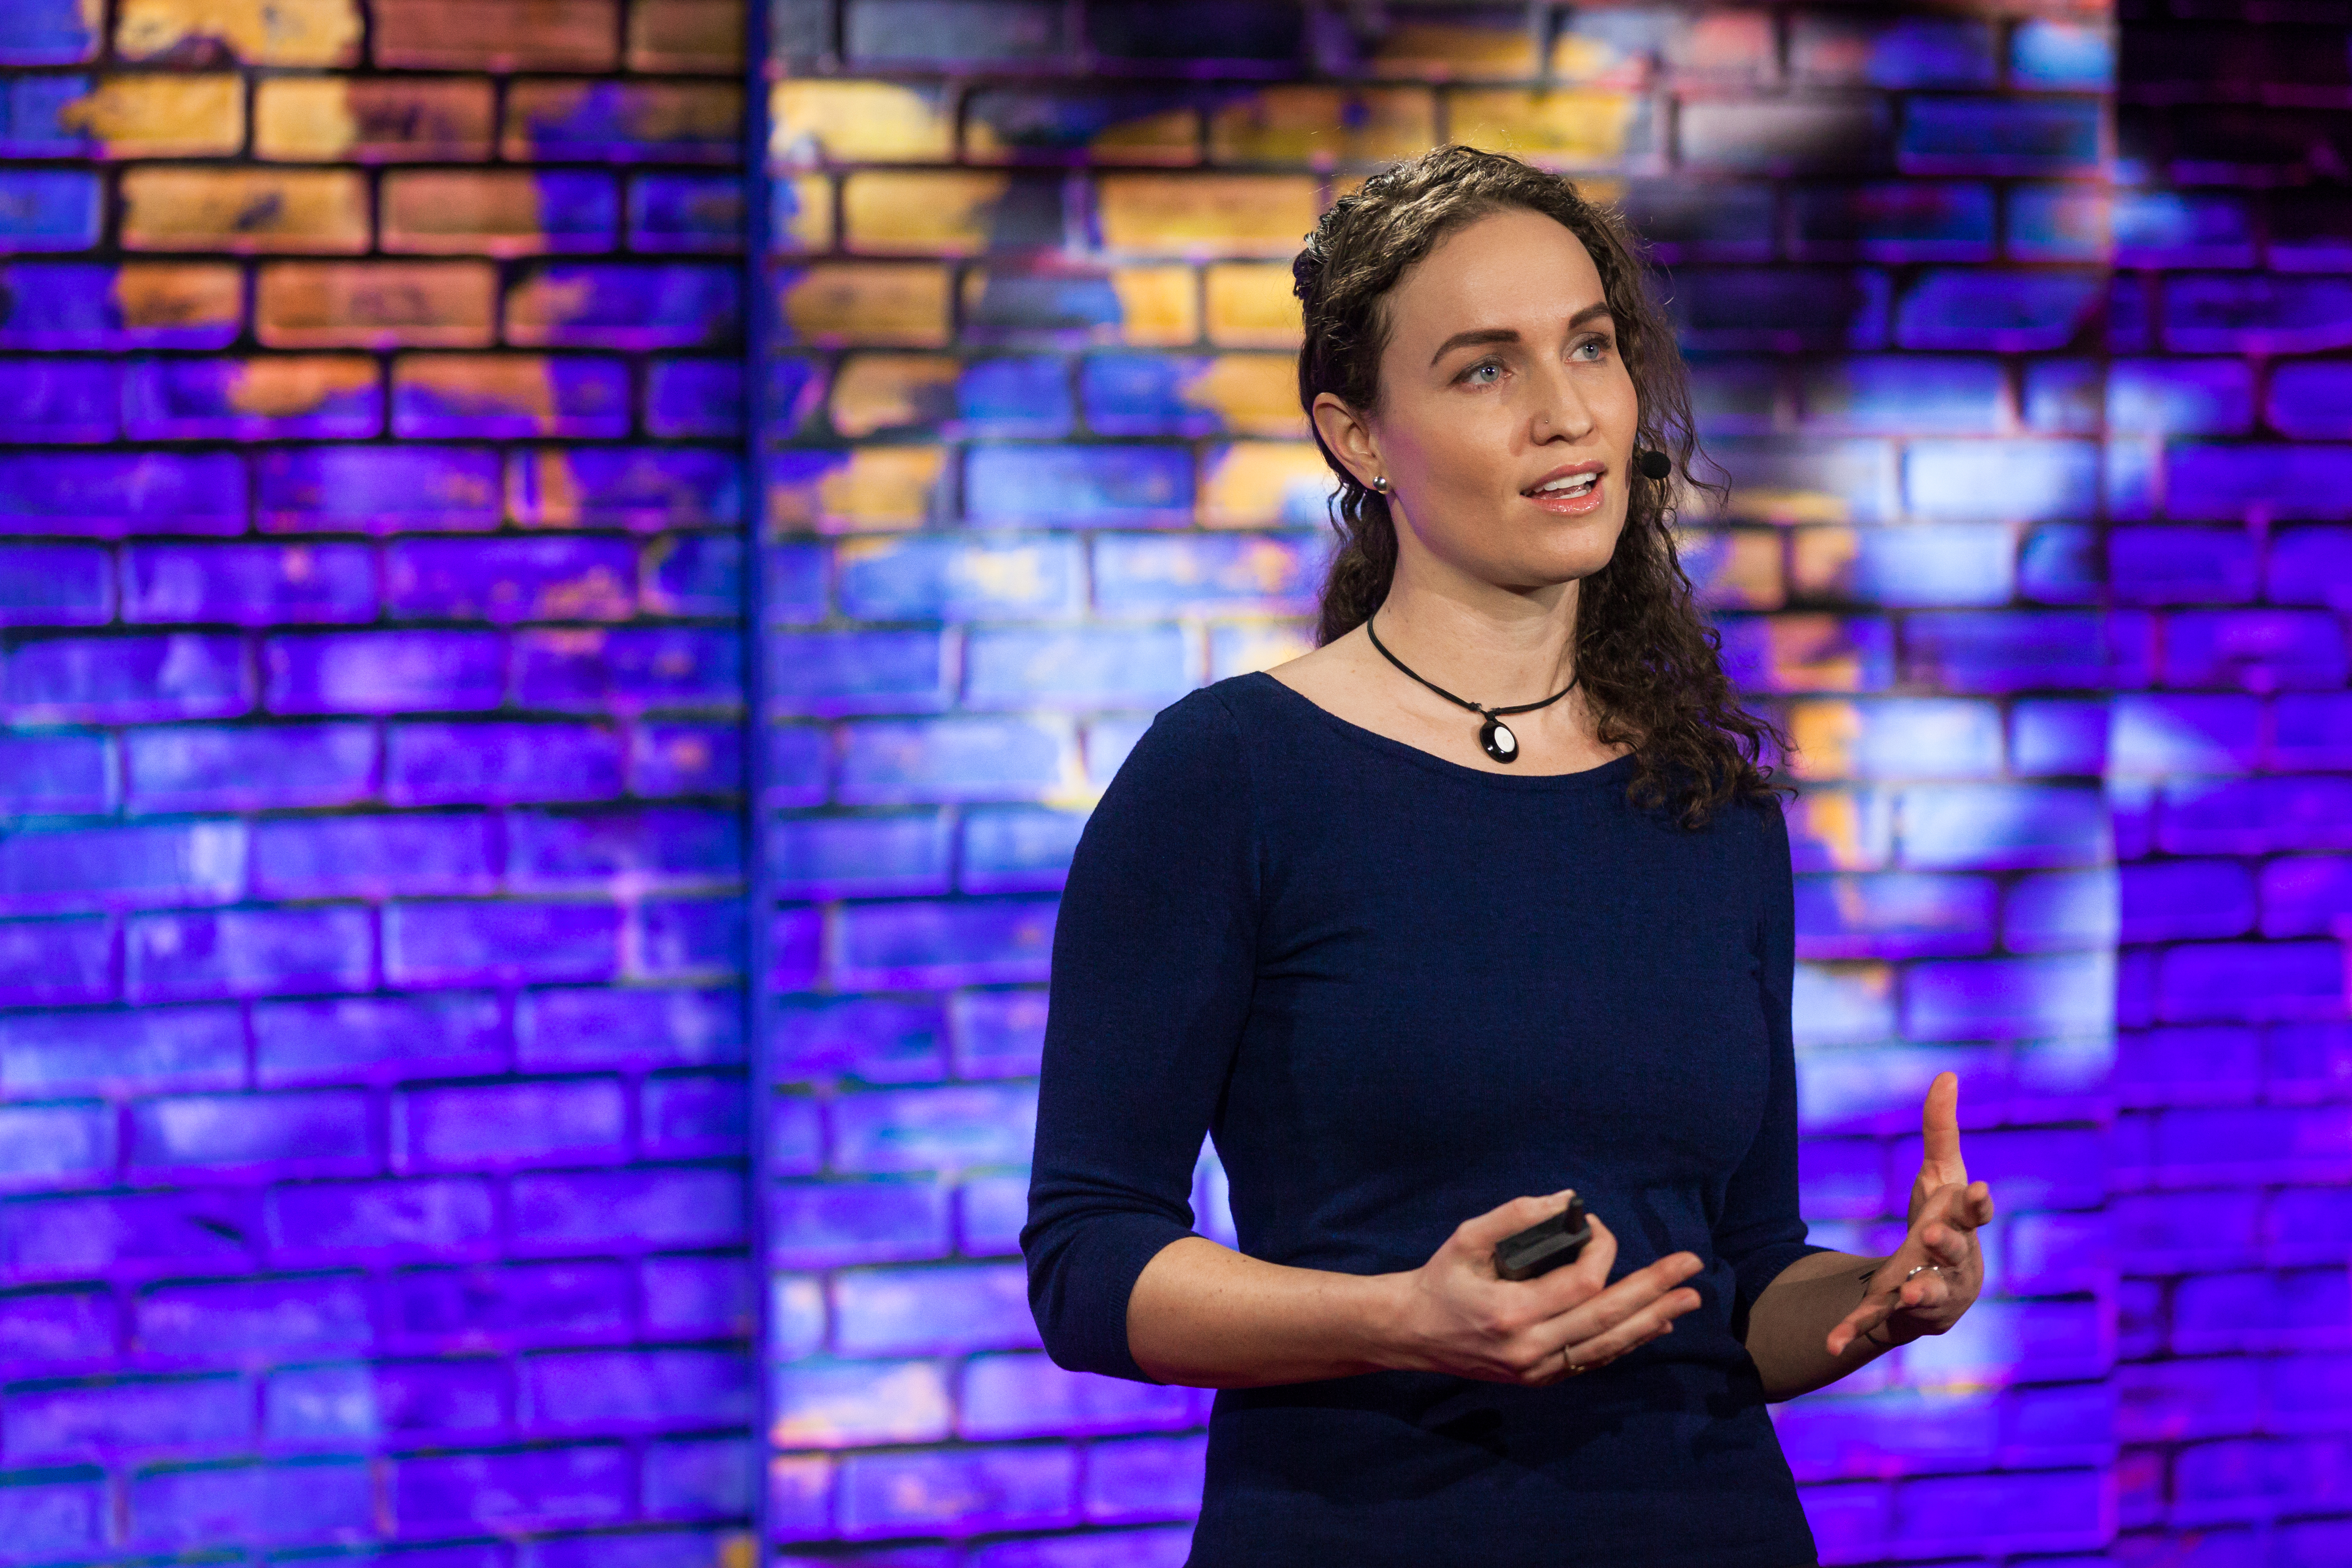 Megan Phelps-Roper speaks and performs at TEDNYC - Rebirth, February 15, 2017, New York, NY. (Photo: Jasmina Tomic / TED)